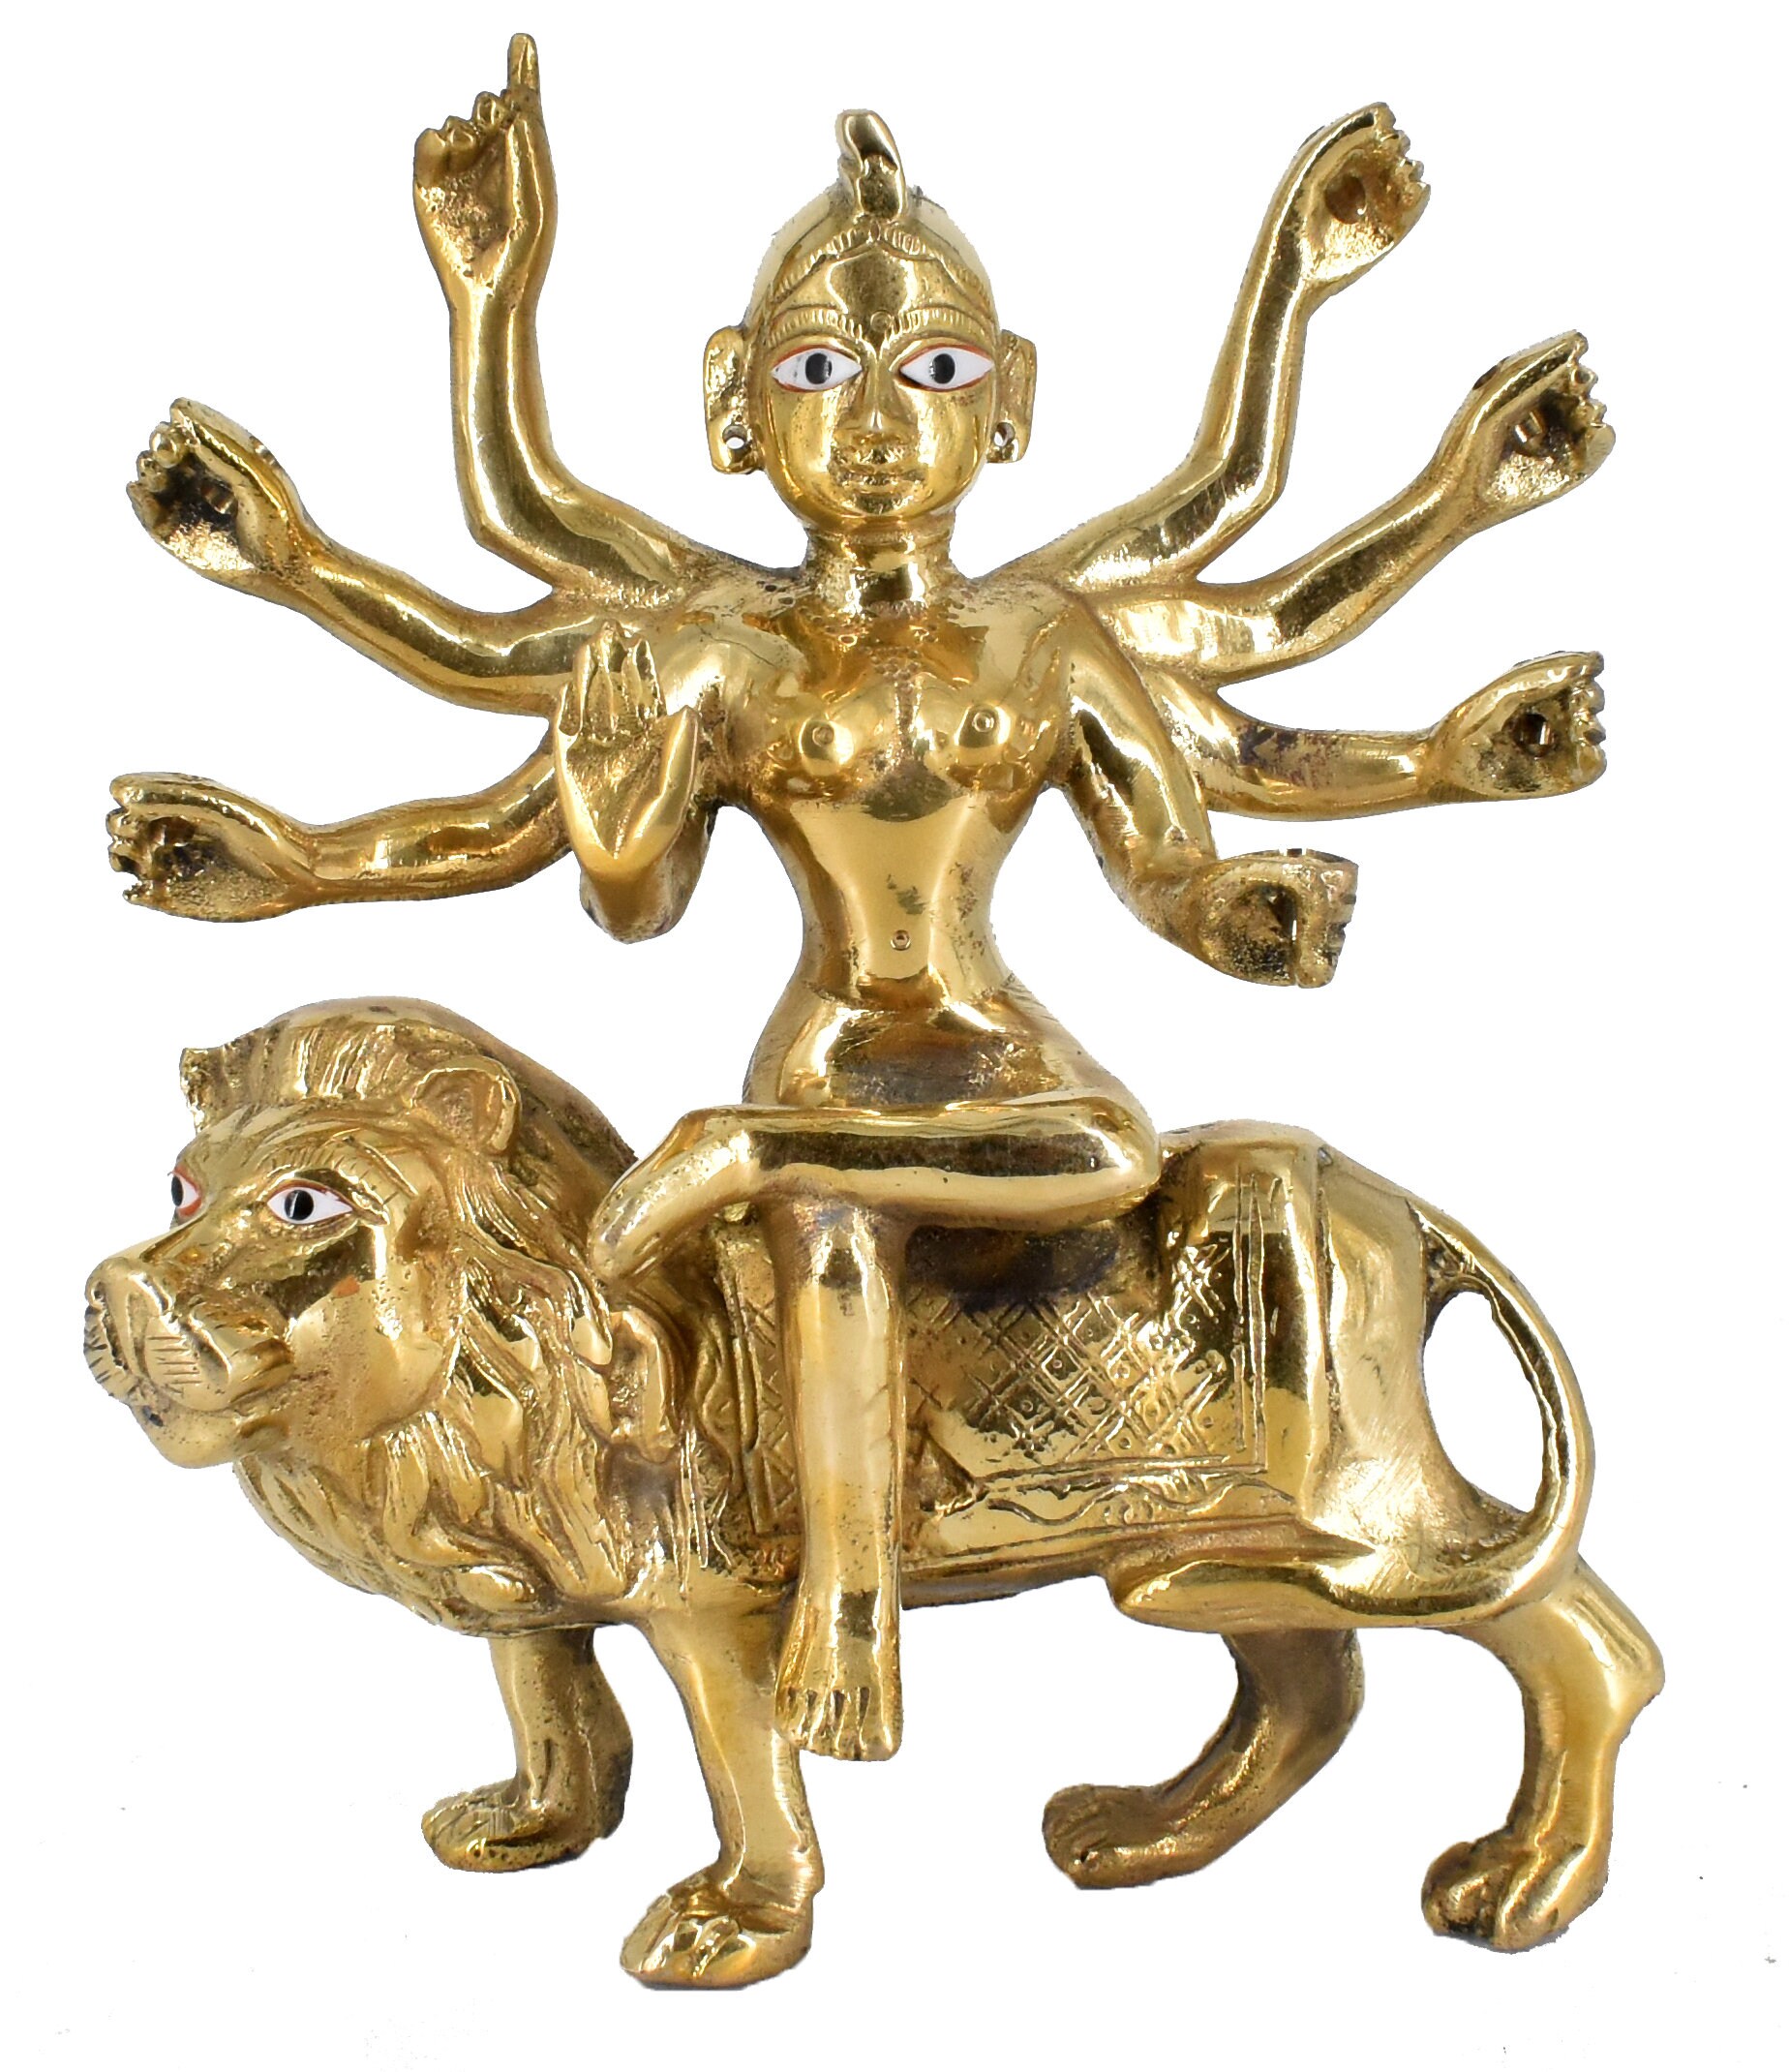 for Temple or home Holy Goddess Durga Devi Sitting On Lion Durga Idol Statue Spiritual Vastu Showpiece Fegurine Religious Murti Gift Item